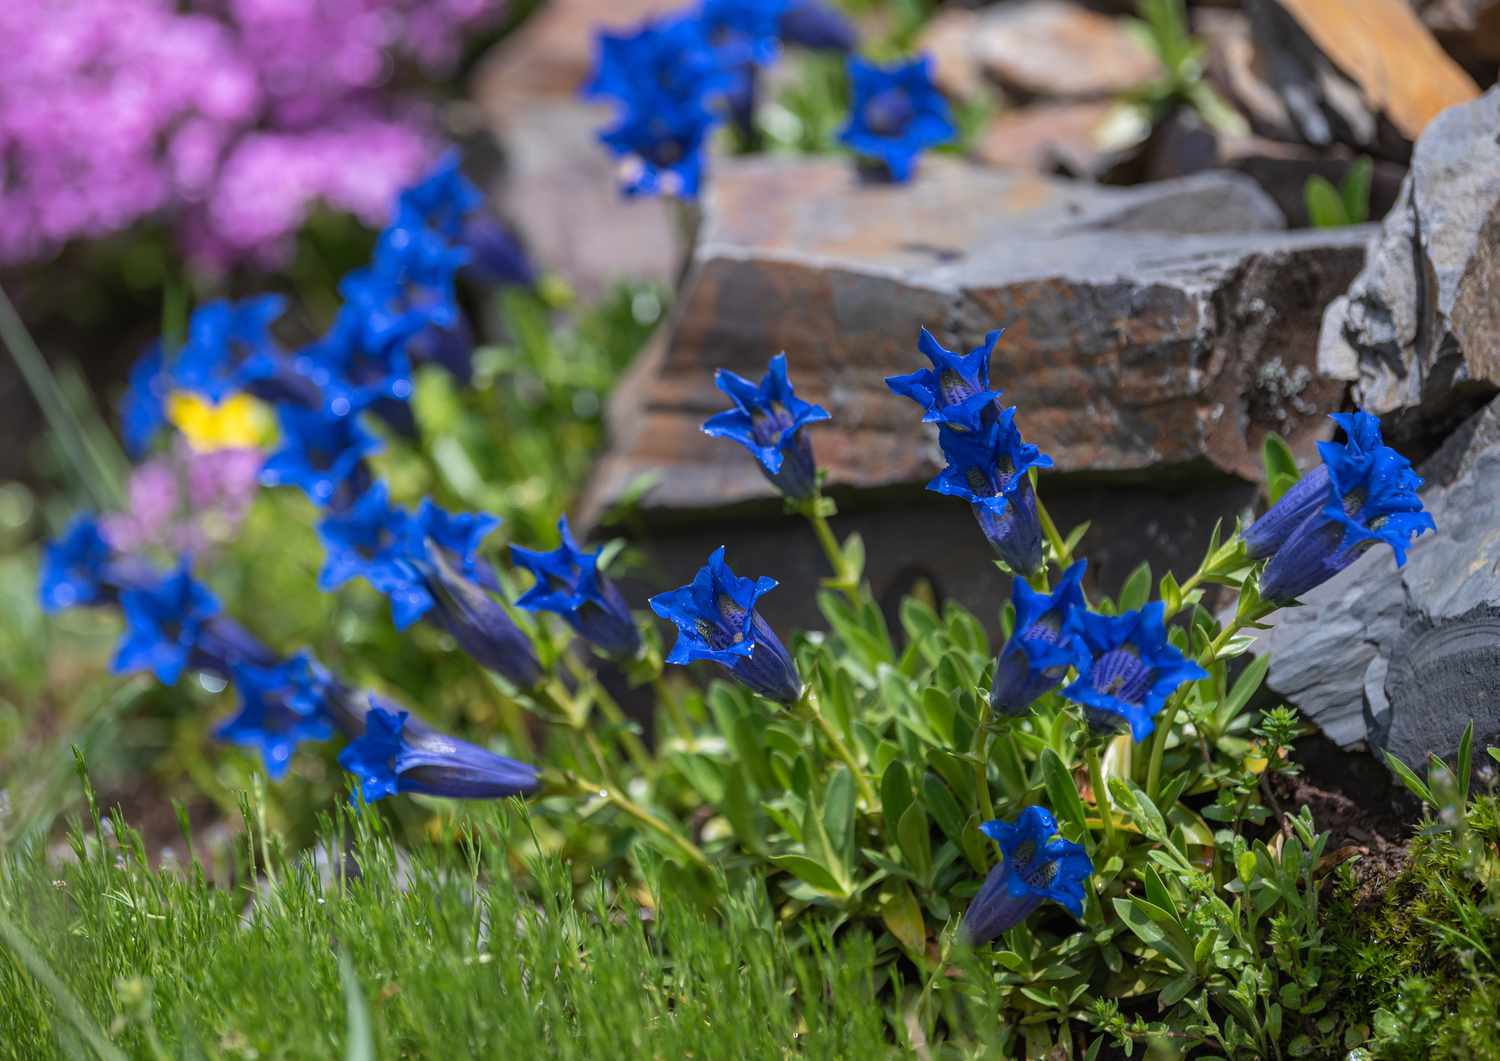 Gentian flowers with deep blue tubular petals next to rock slabs